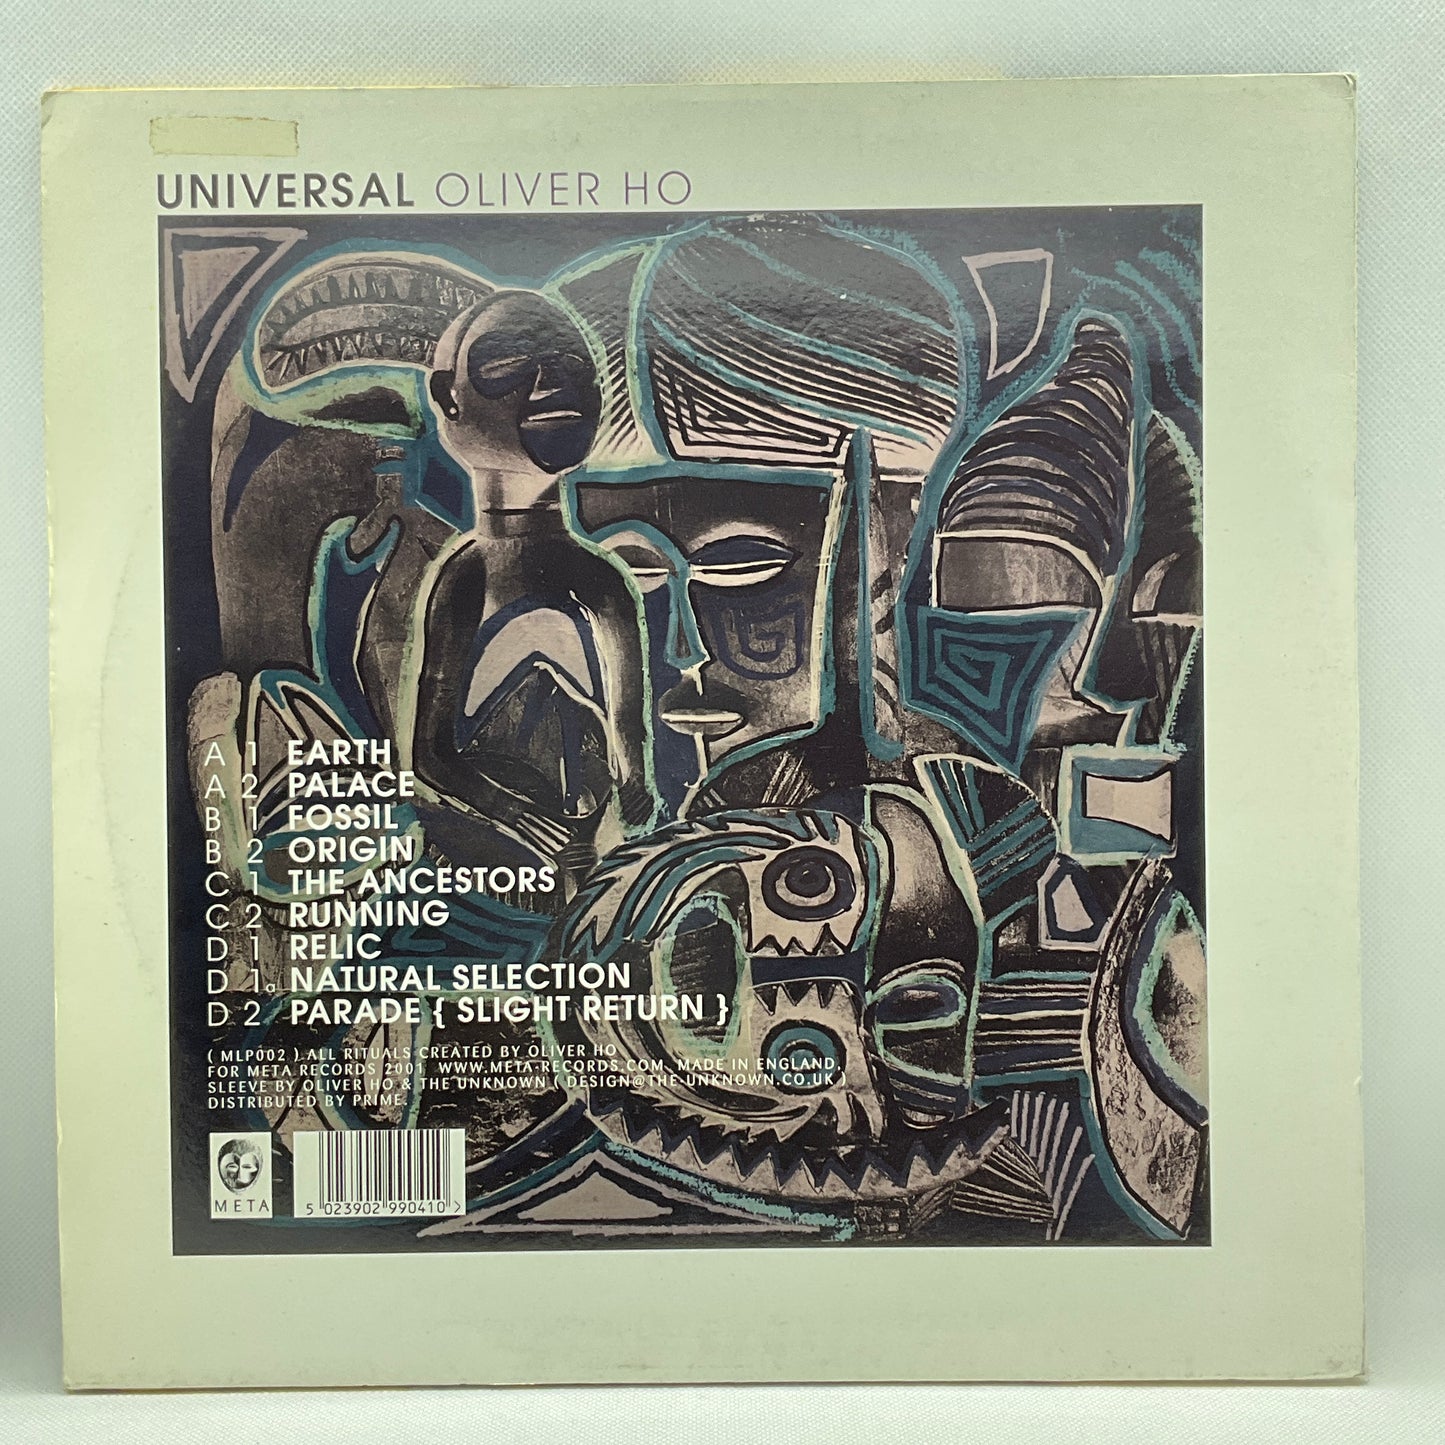 Oliver Ho - Universal / META LP002